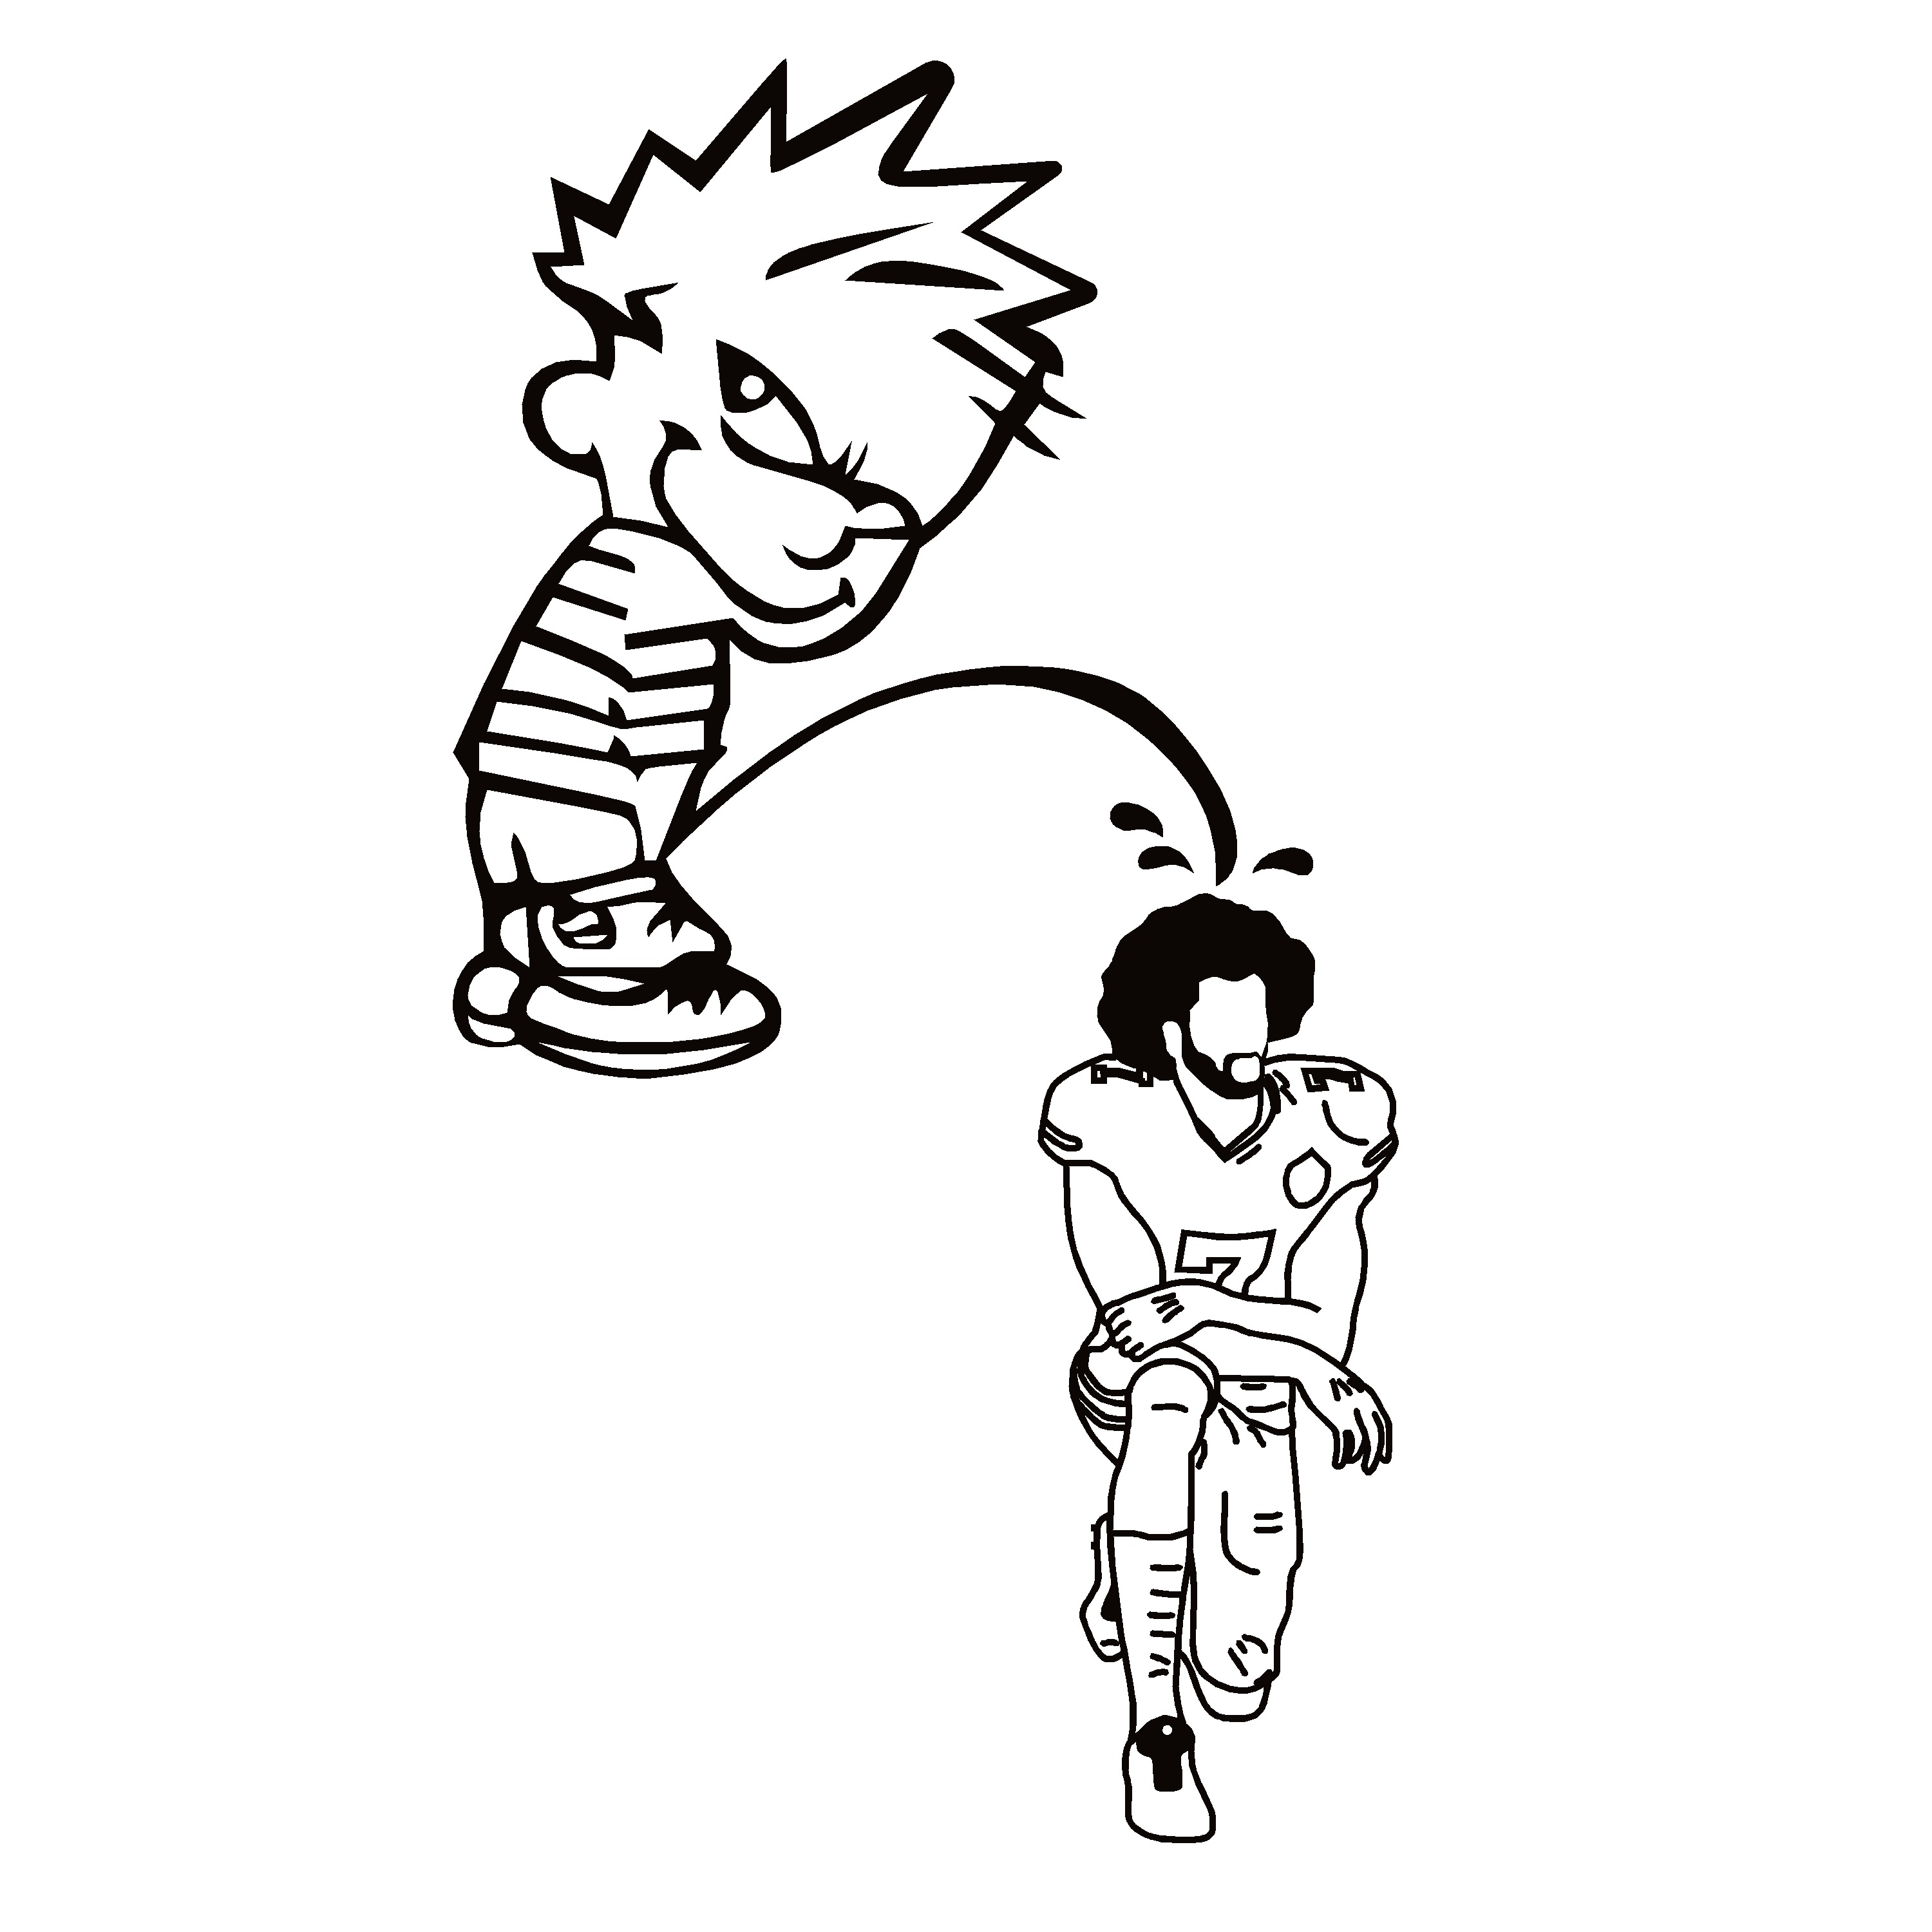 Calvin hobbs peeing sports pics